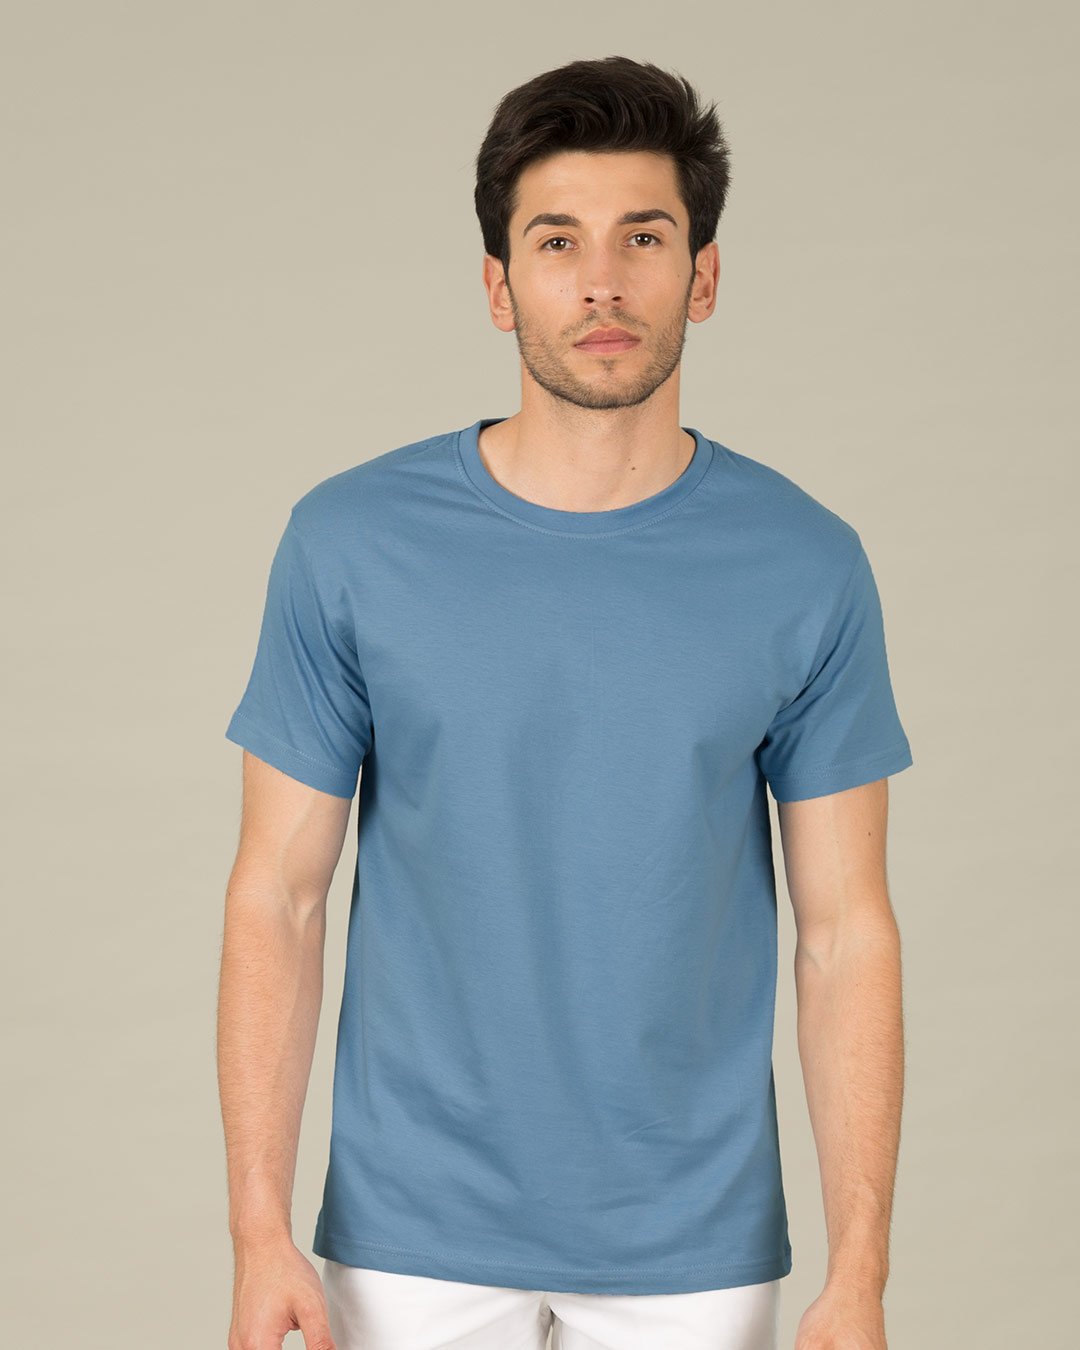 island-blue-half-sleeve-t-shirt-men-s-plain-t-shirts-209191-1560418315 for him Island Blue